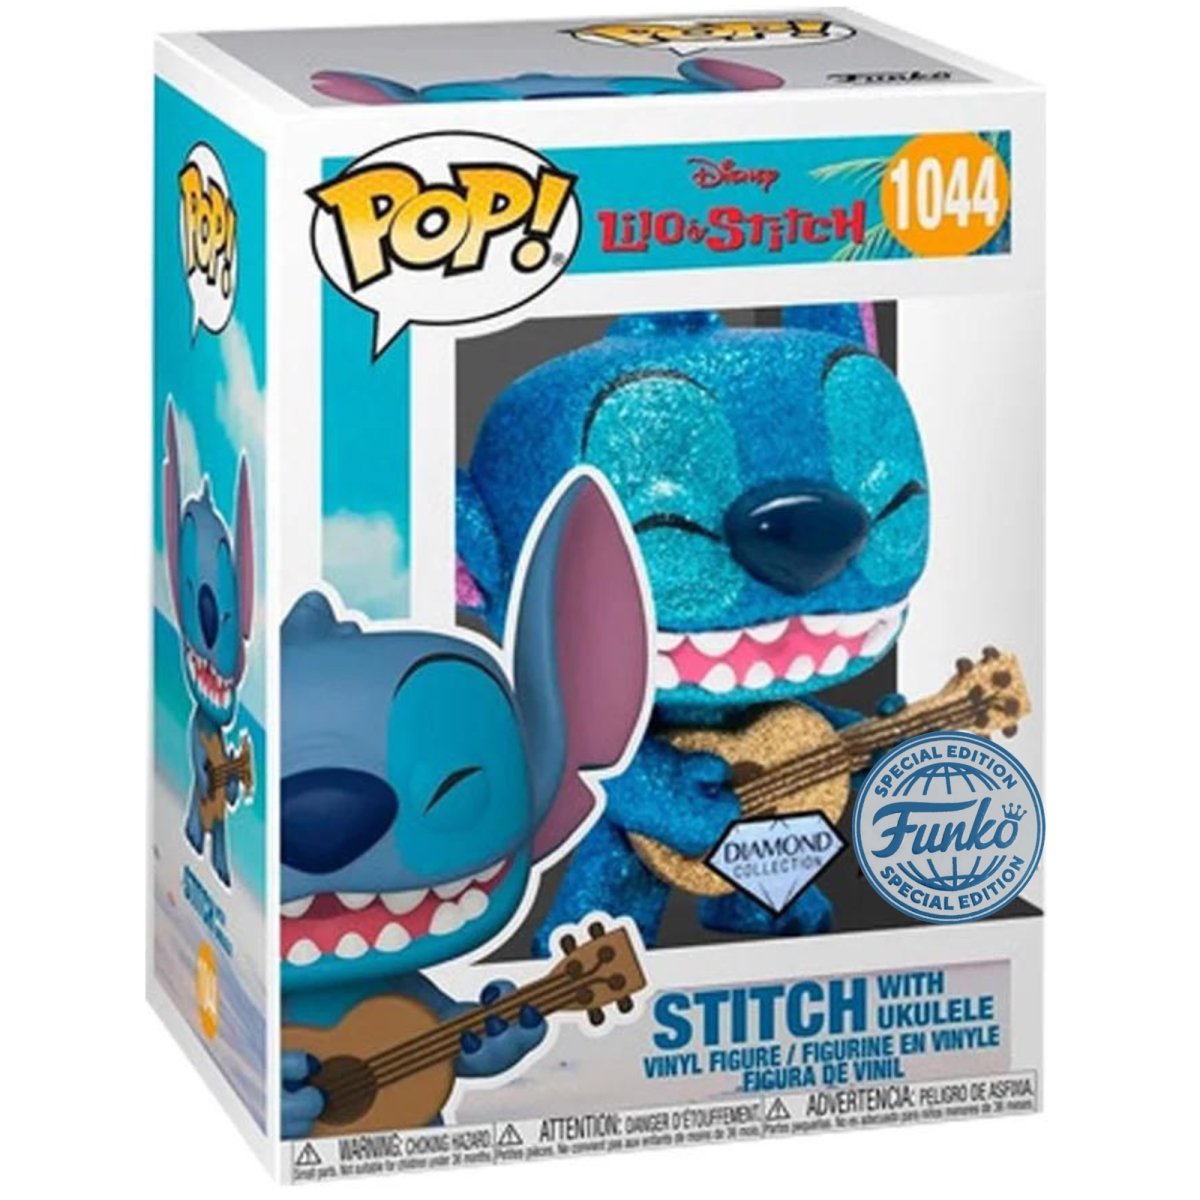 Lilo & Stitch - Stitch with Ukulele (Diamond Special Edition) #1044 - Funko Pop! Vinyl Disney - Persona Toys